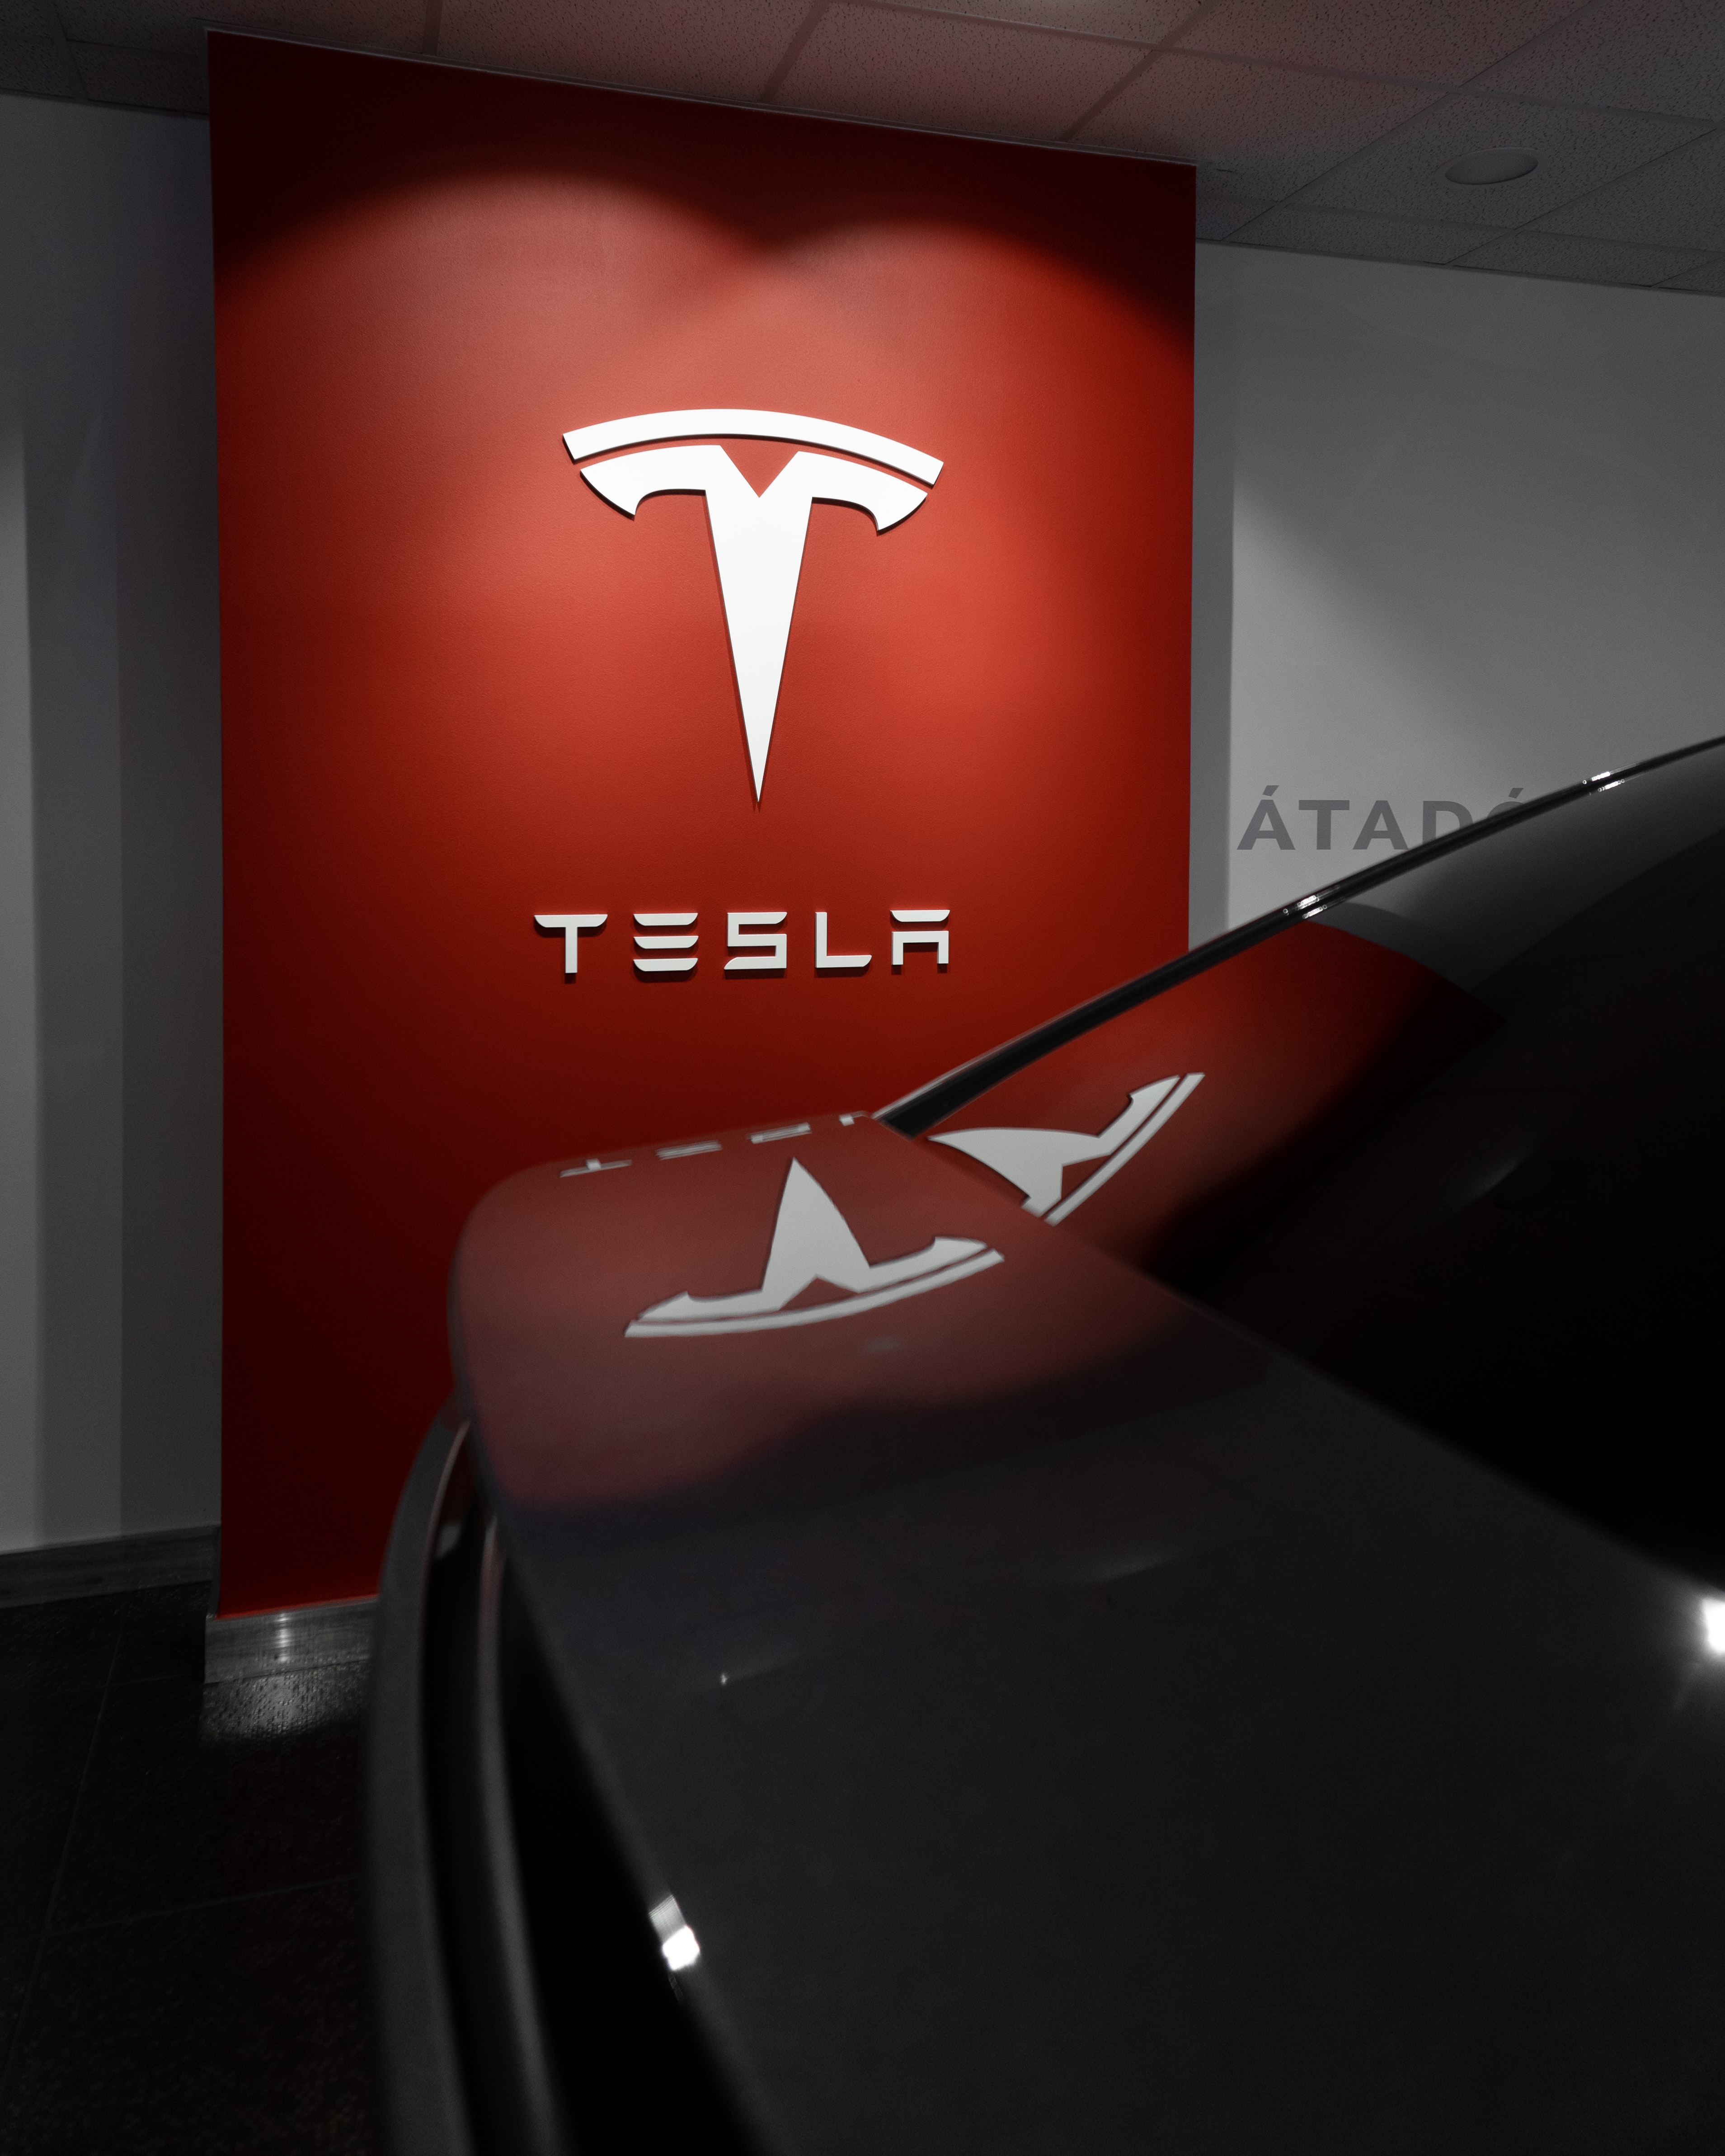 Wonderinterest | The Stumbling Stock of Tesla: Is It Rally Time?